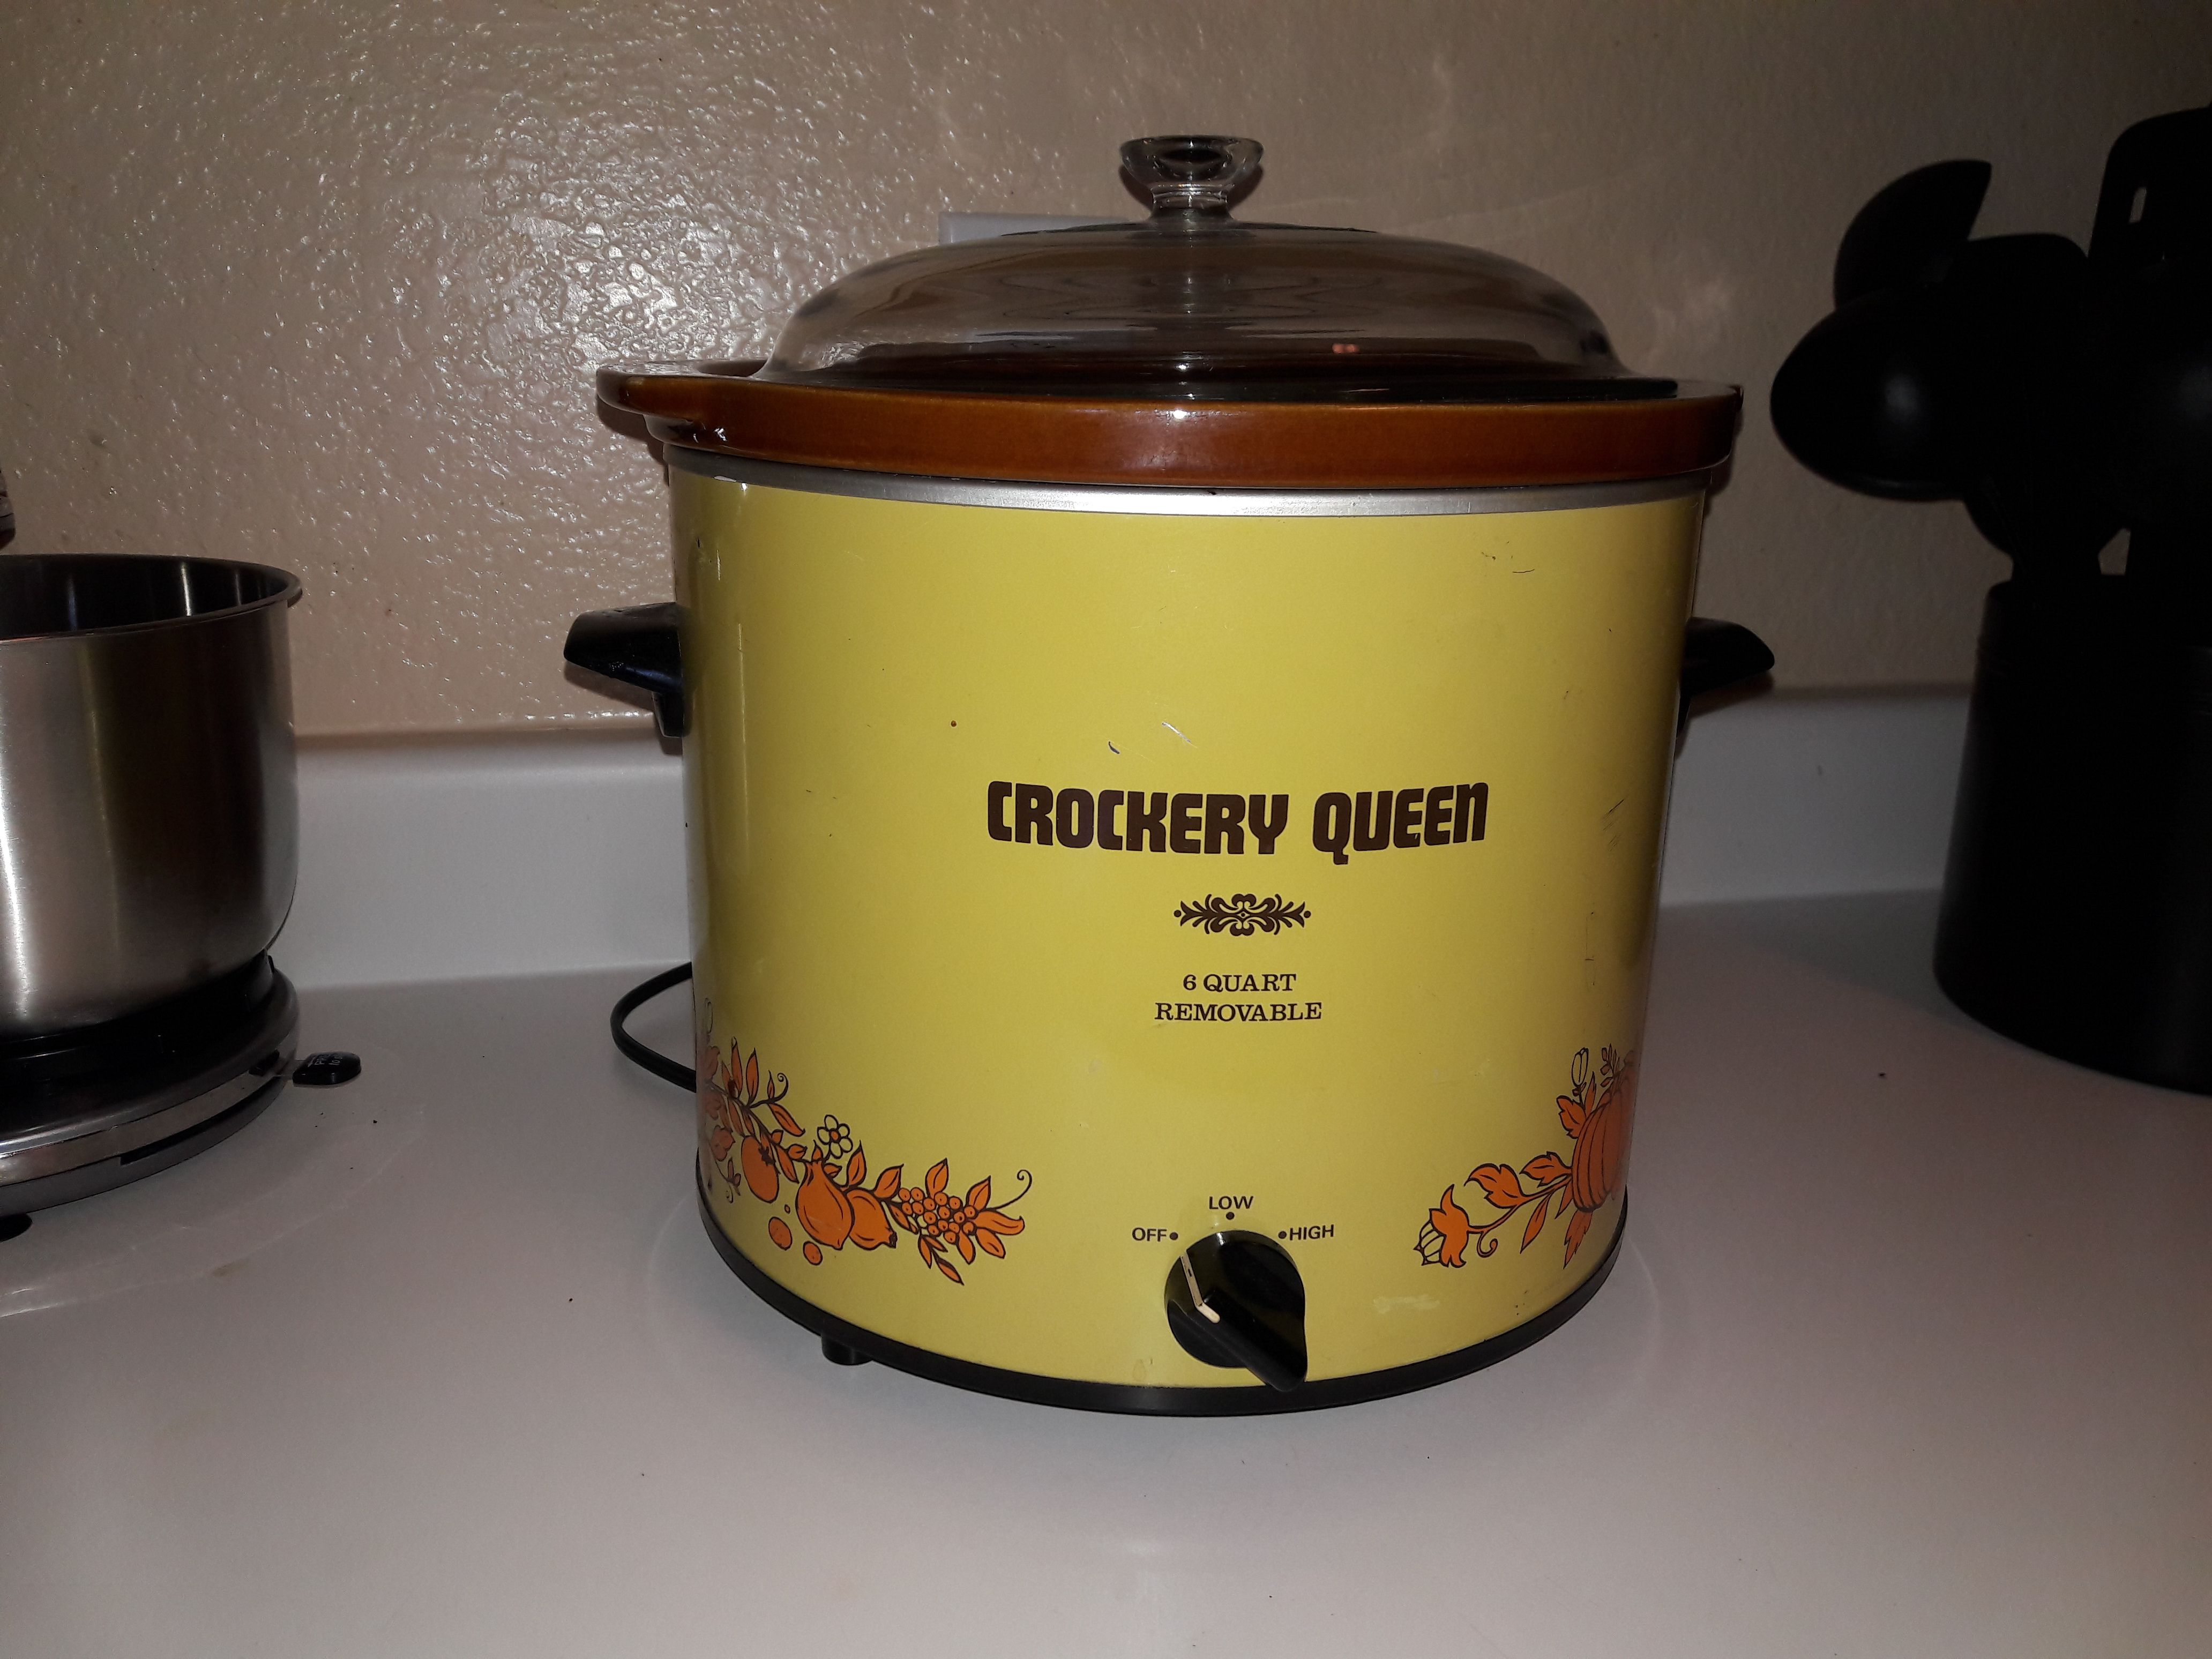 Fabreware 7 Quart Programmable Slow Cooker Crock Pot Locking Lid for Sale  in Conroe, TX - OfferUp